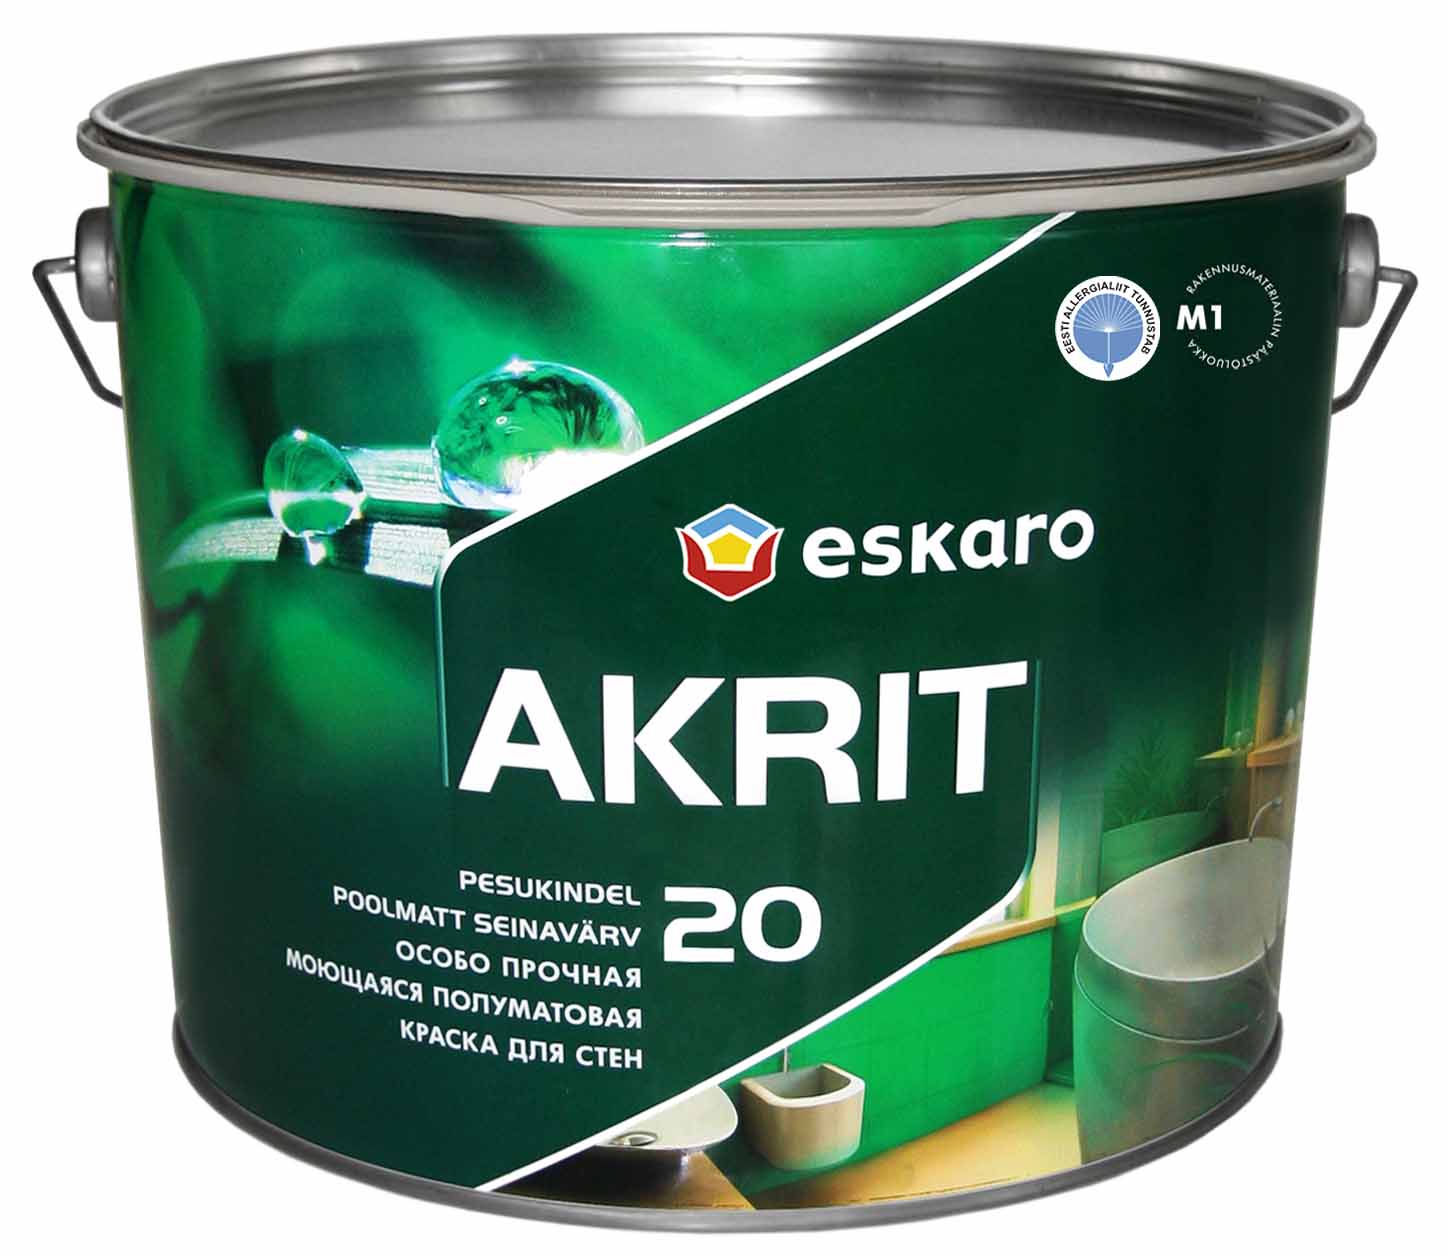 Особо прочная моющаяся полуматовая краска для стен Eskaro Akrit 20 (База TR - прозрачная) 9 л								